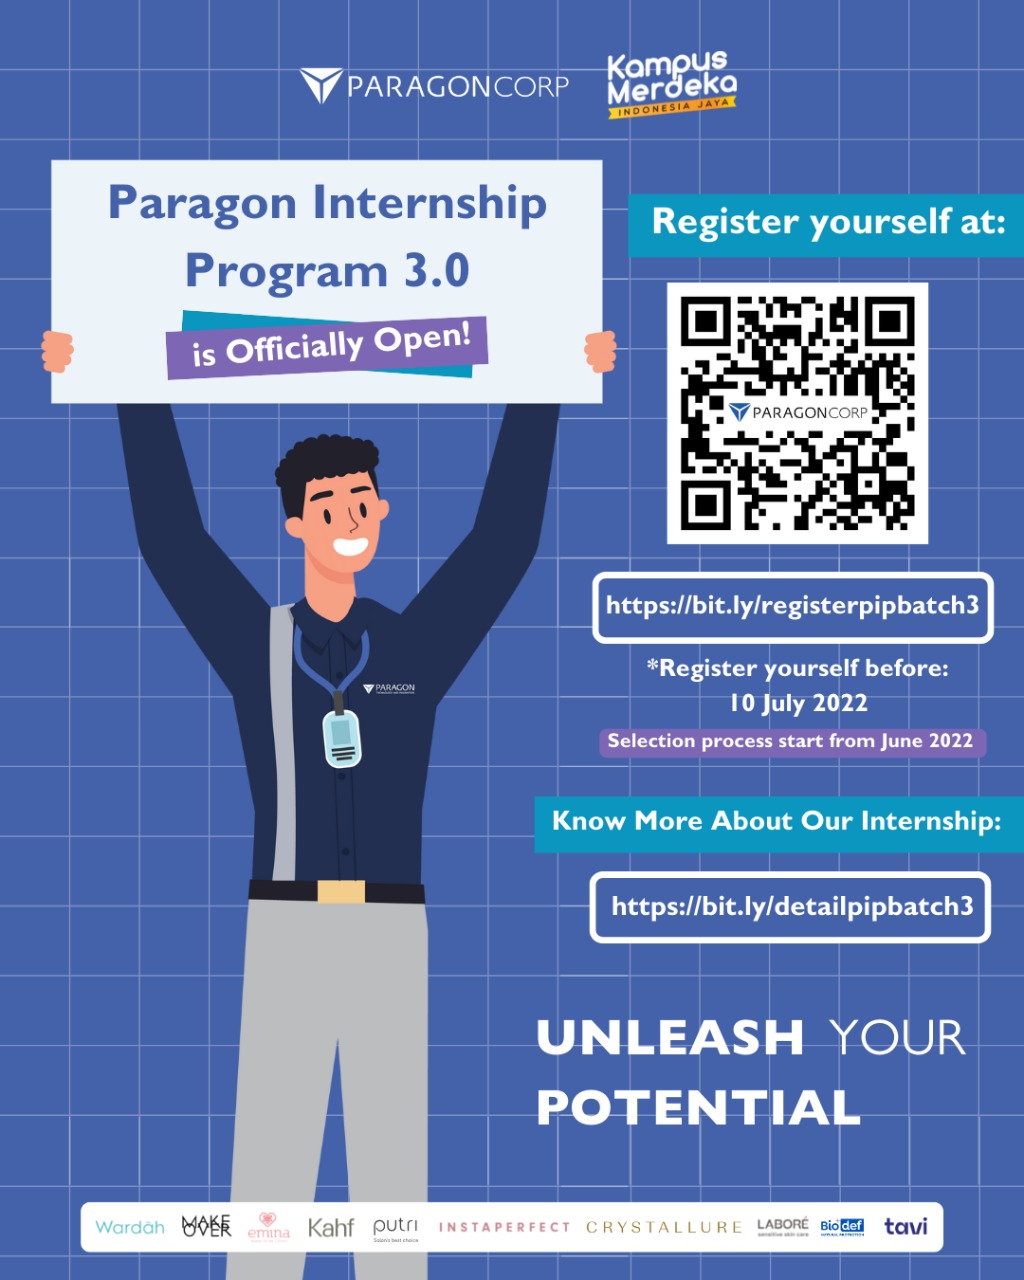 Paragon Internship Program 3.0